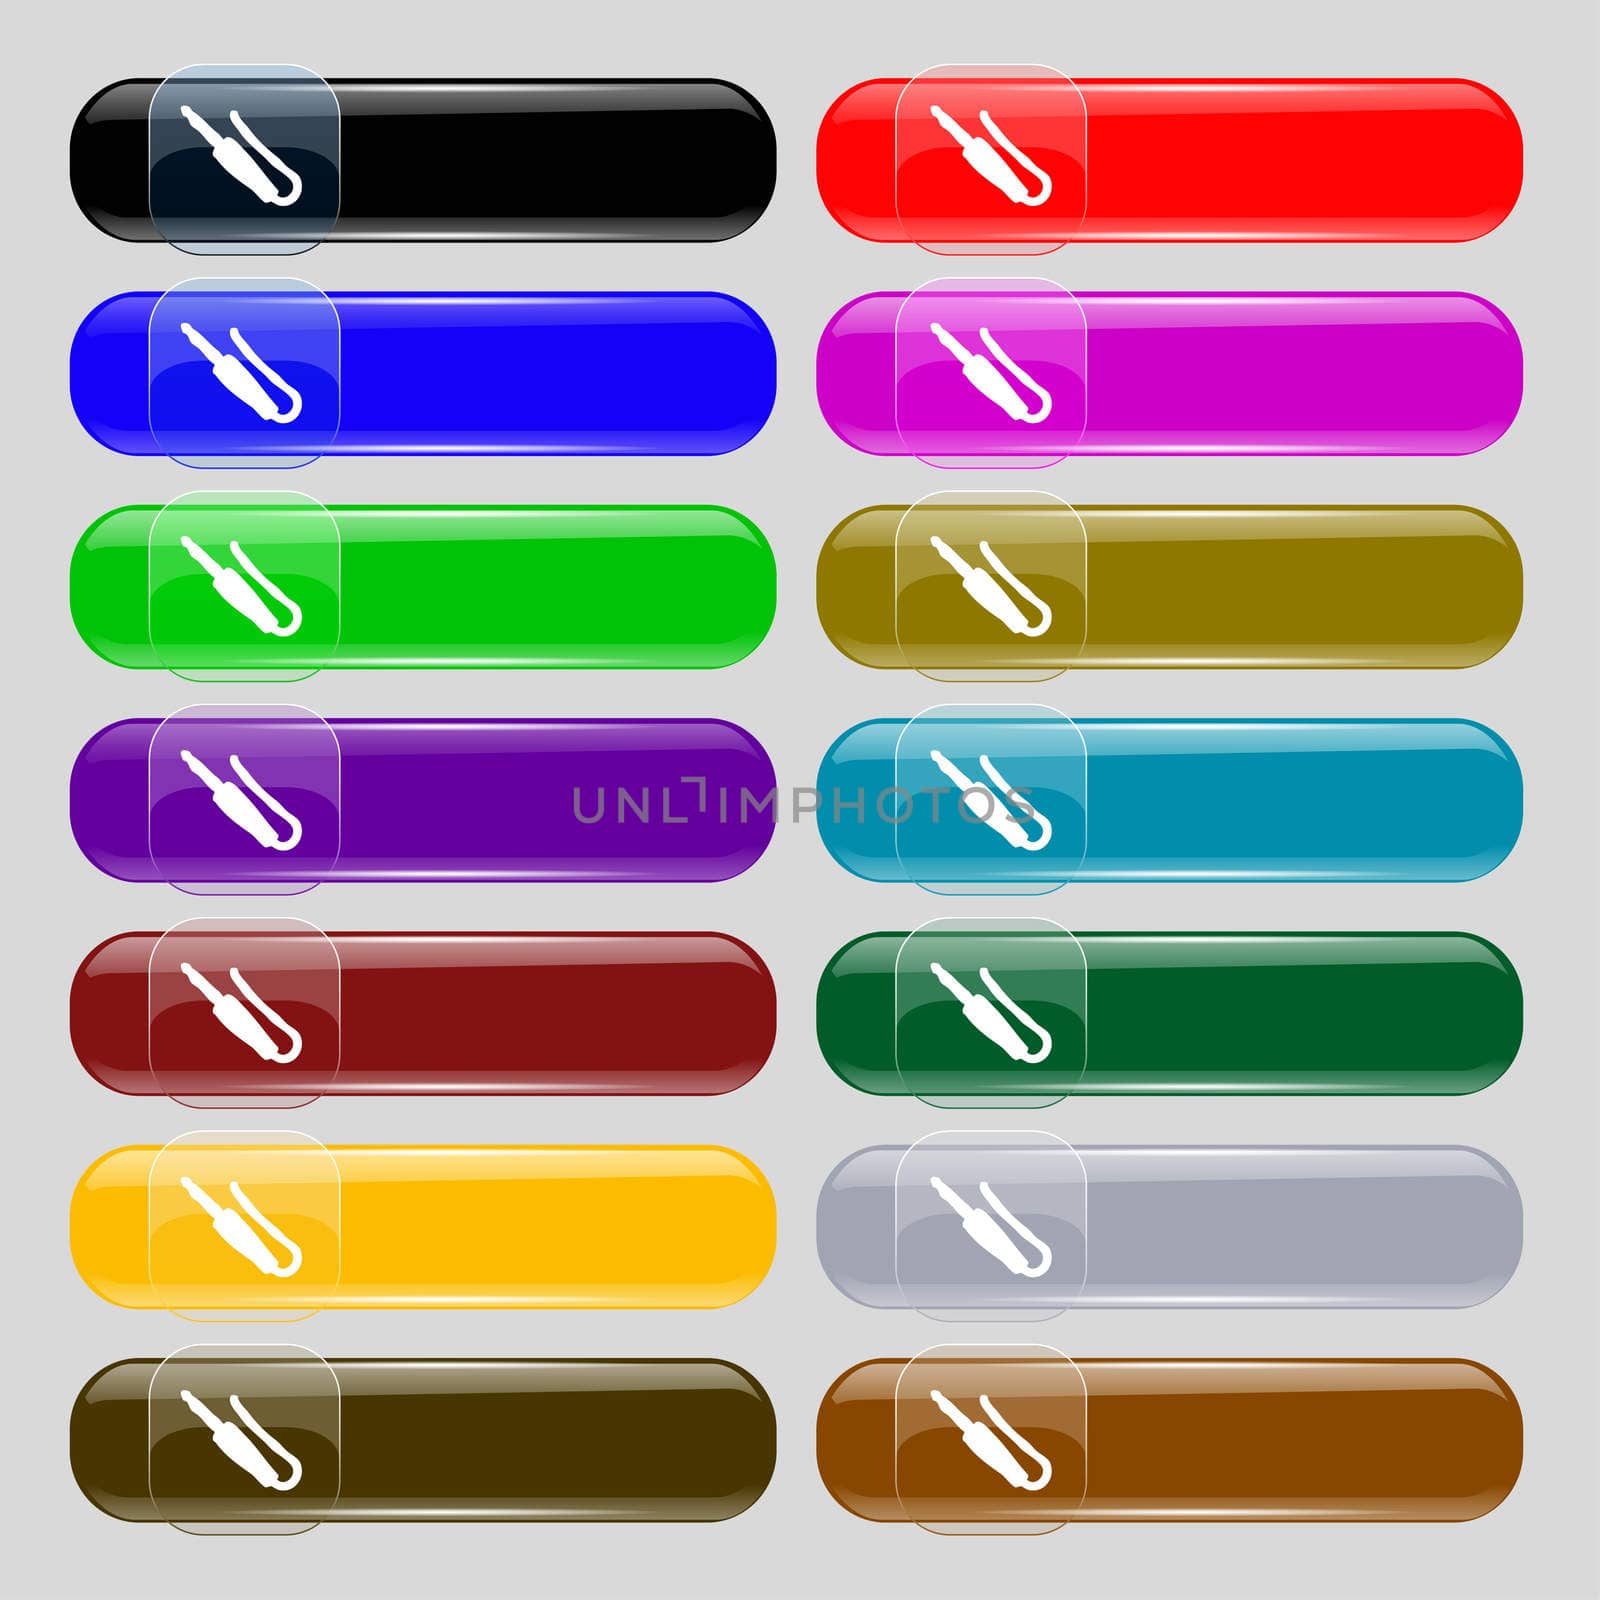 plug, mini jack icon sign. Big set of 16 colorful modern buttons for your design. illustration